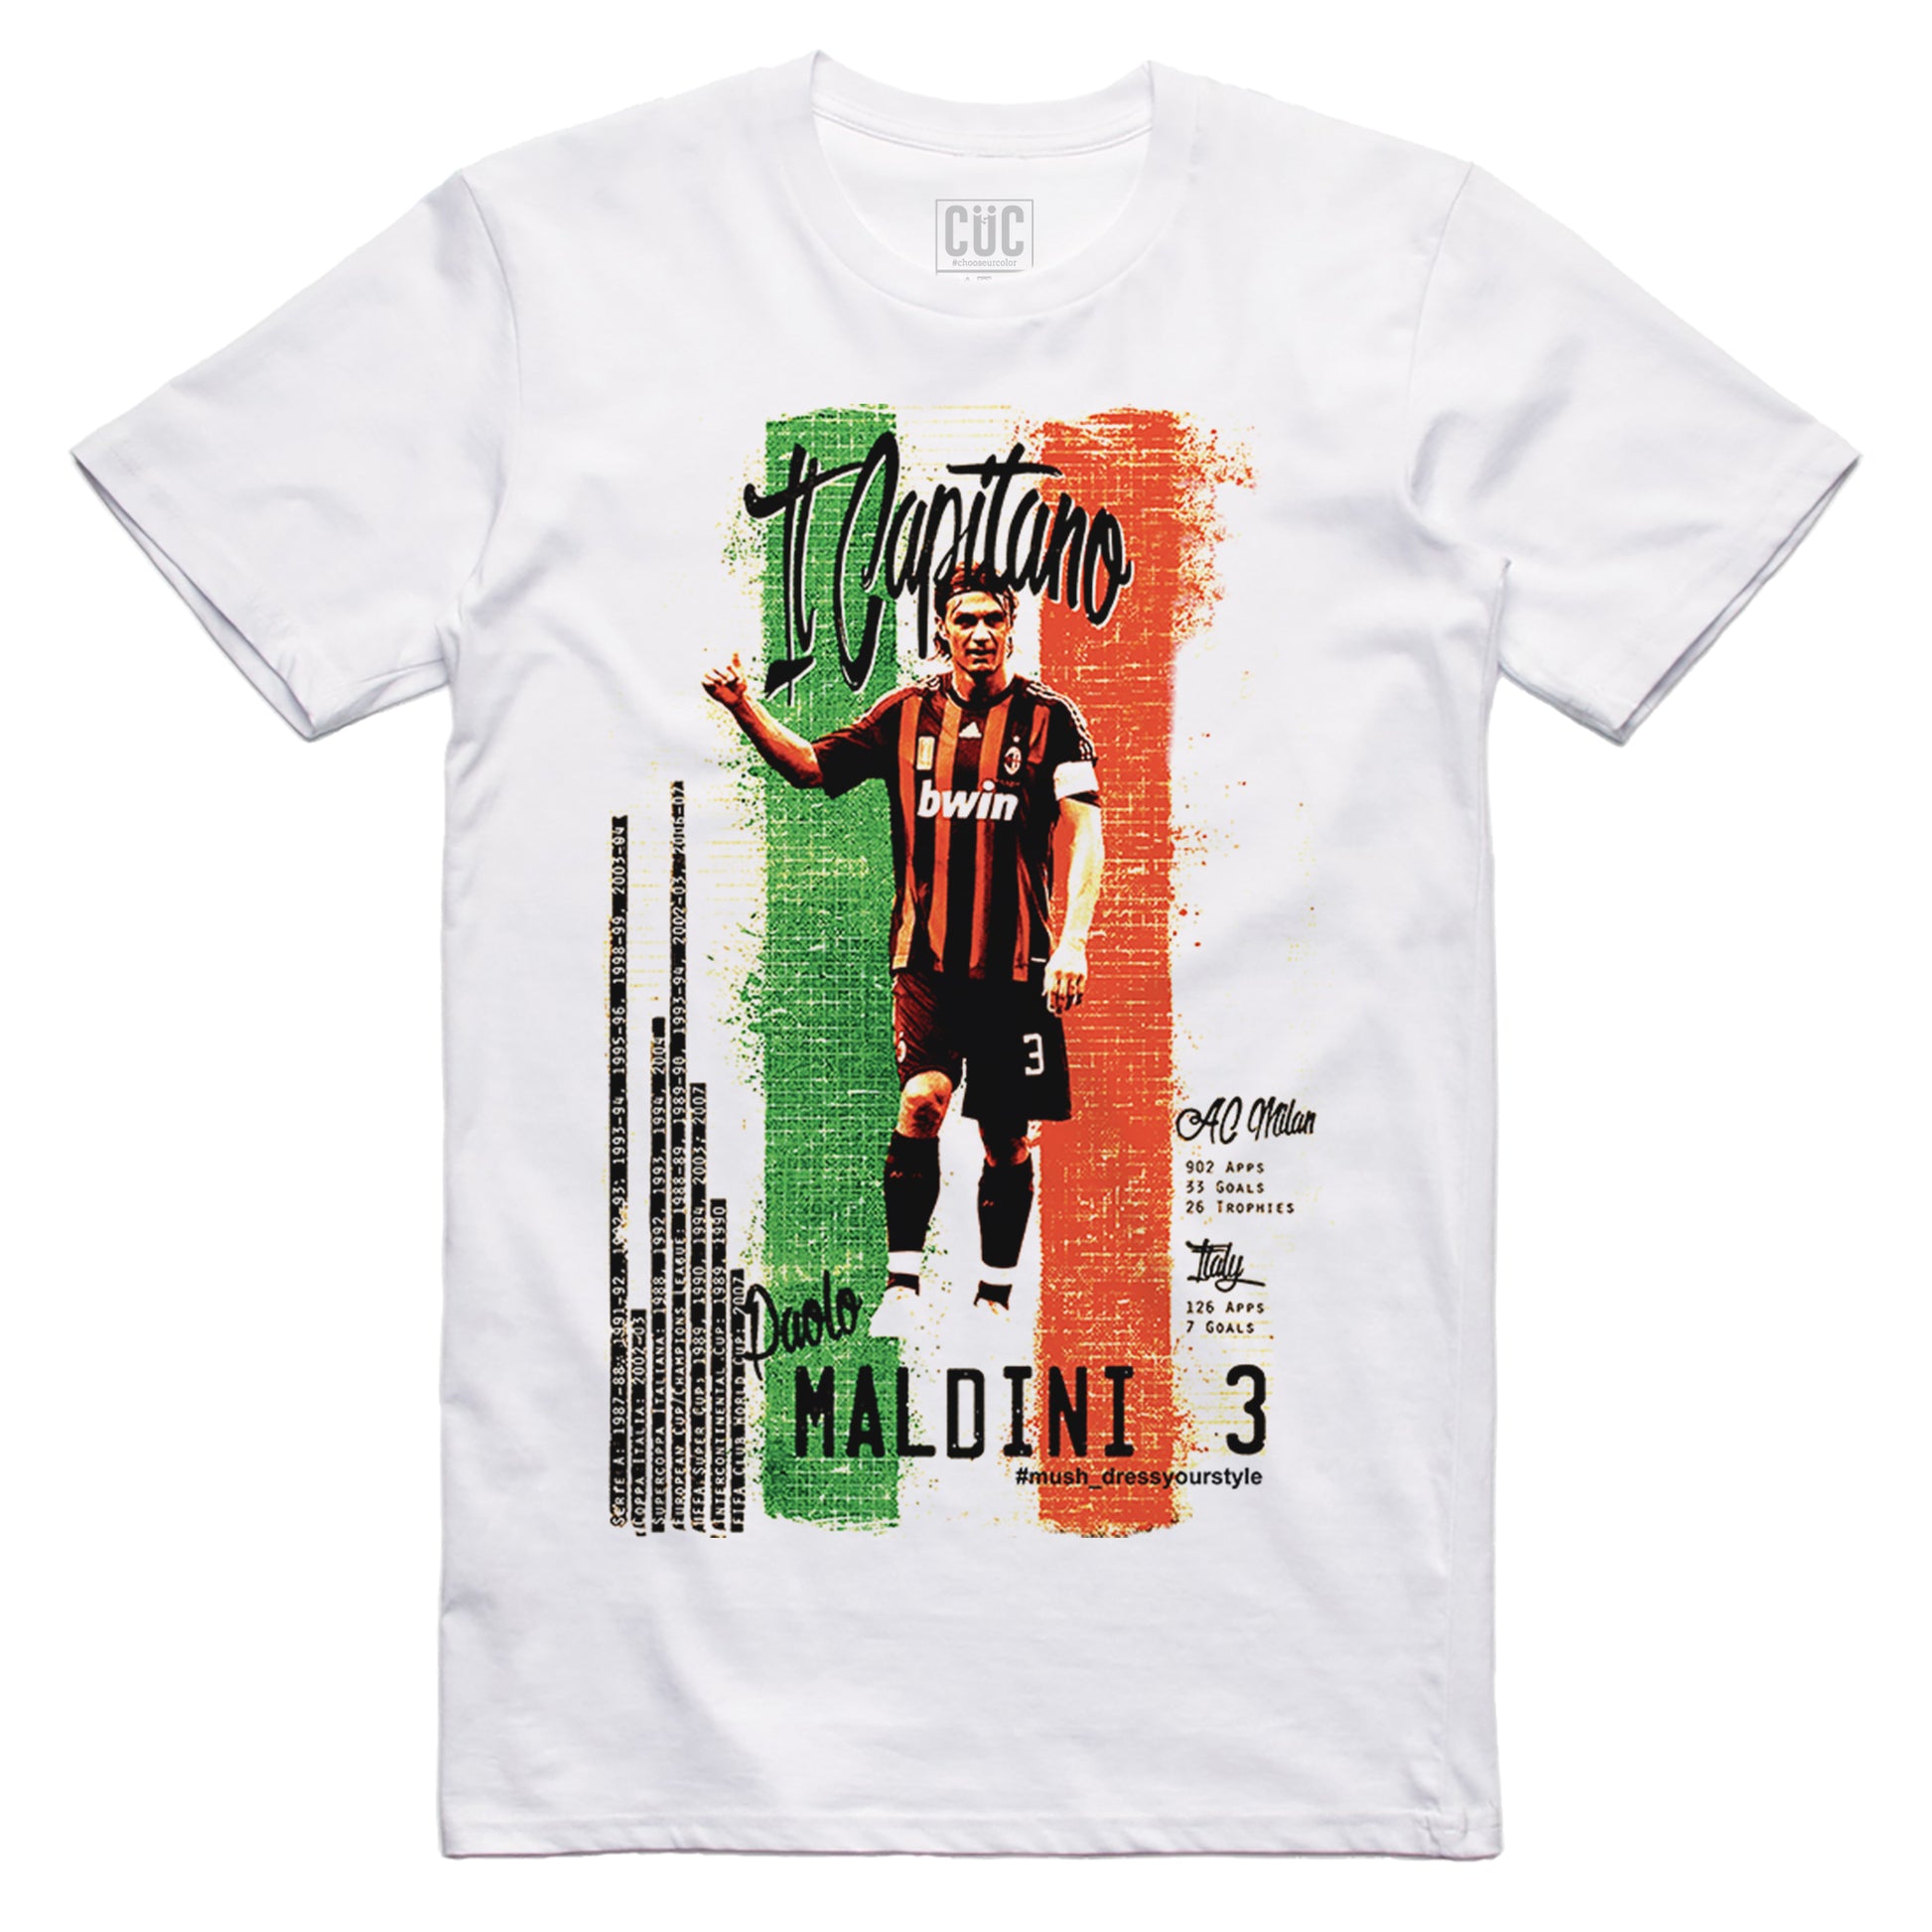 T Shirt Maldini il Capitano Milan - Vintage - la fossa - SPORT - #ChooseurColor - CUC chooseurcolor